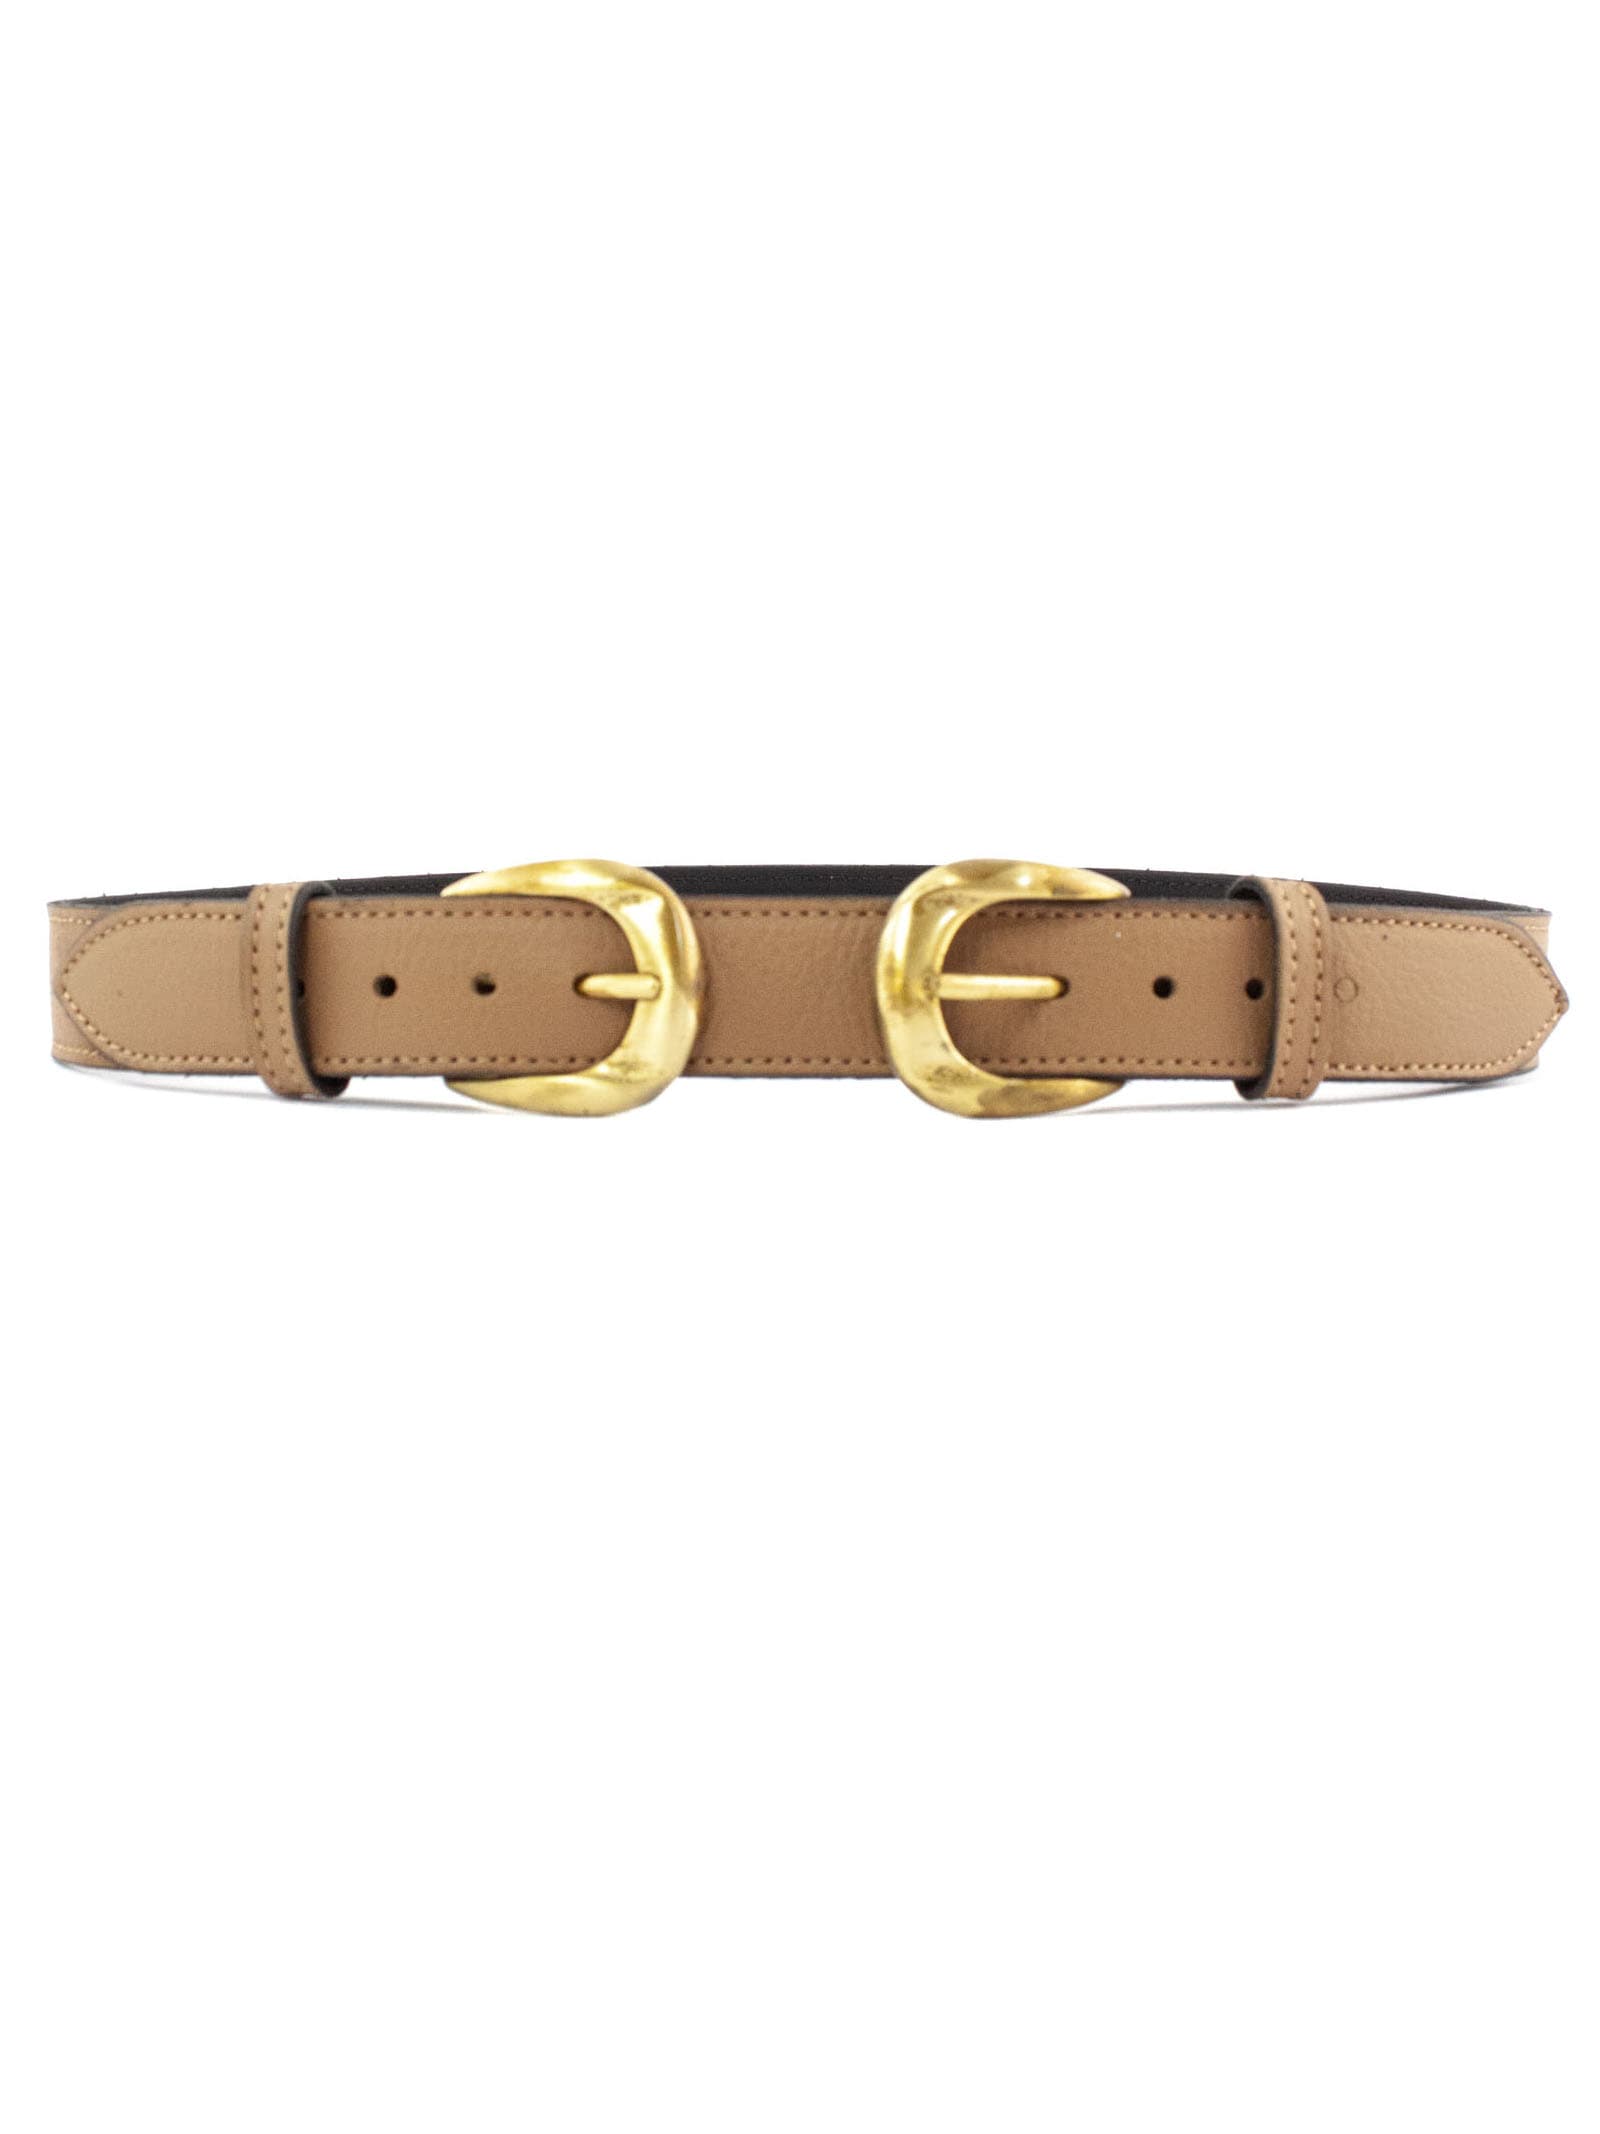 Federica Tosi Brown Leather Belt